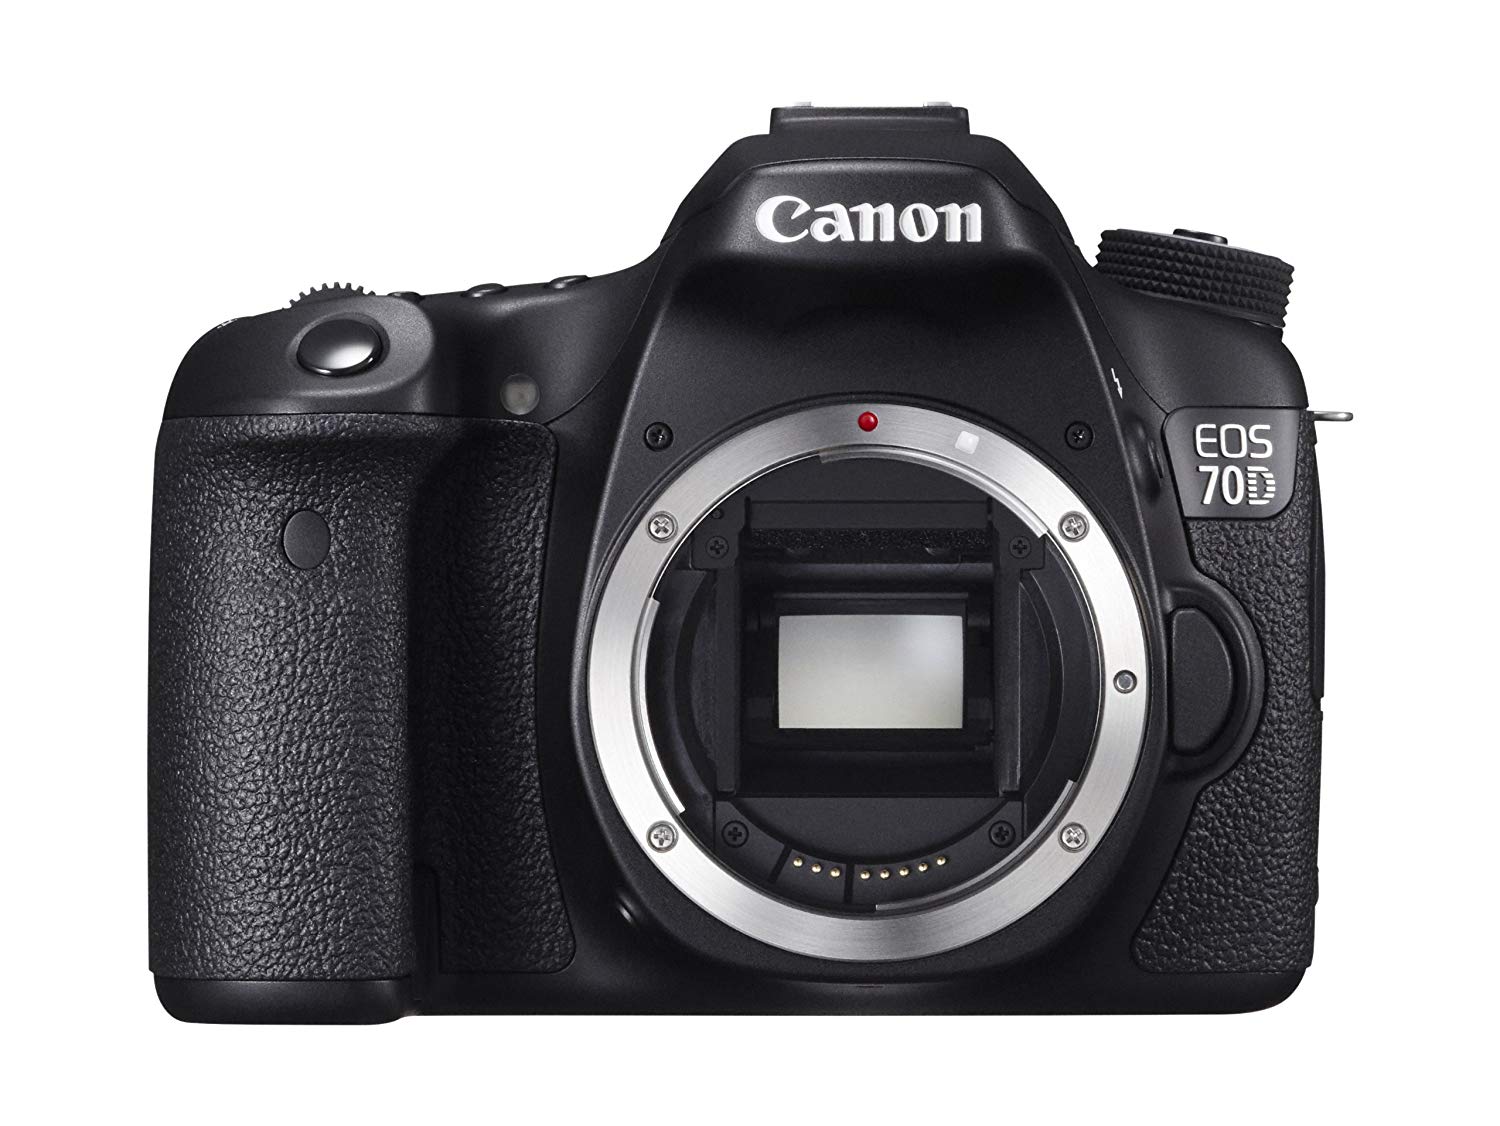  Canon Cameras कैनन EOS 70D (8469B002) डिजिटल एसएलआर कैमरा ब्लैक 20.2 एमपी डिजिटल एसएलआर कैमरा - बॉडी...